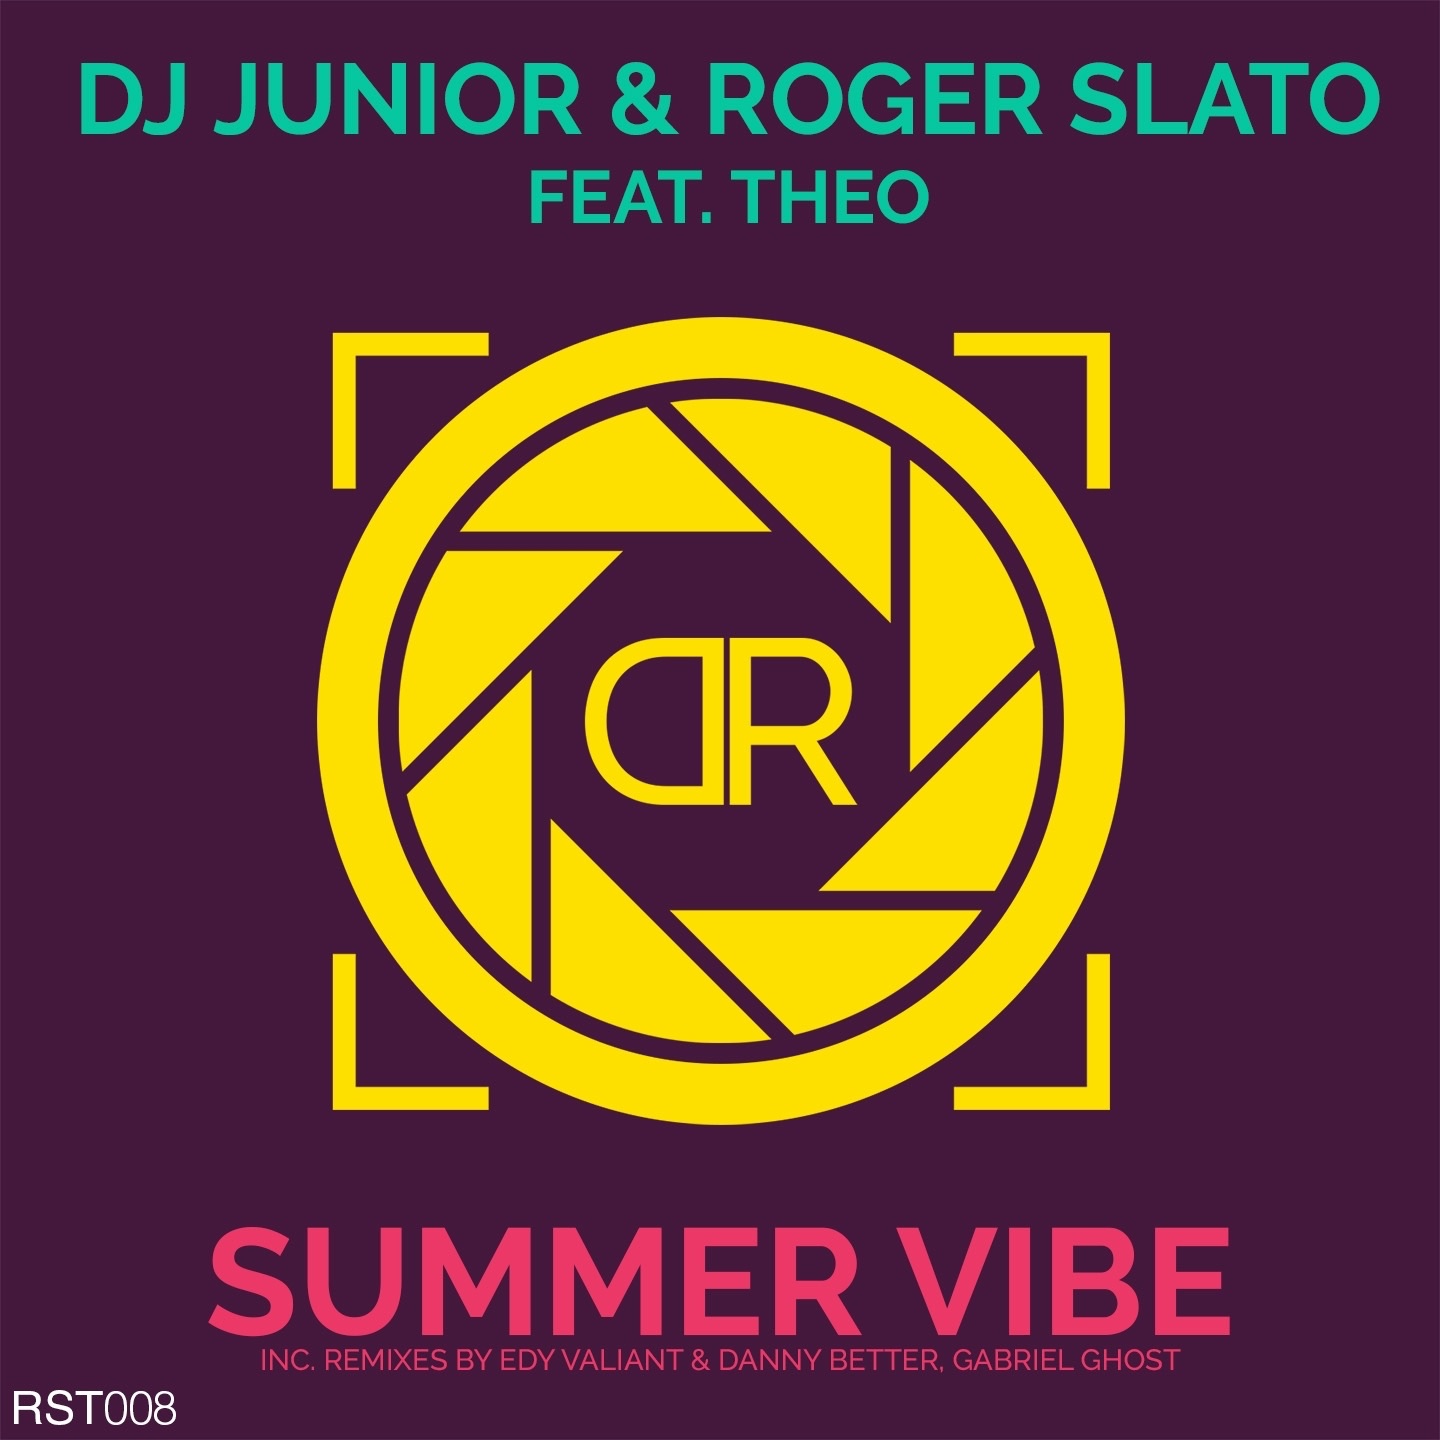 DJ Junior & Roger Slato feat Theo - Summer Vibe (Theo Gabriel Ghost Remix)